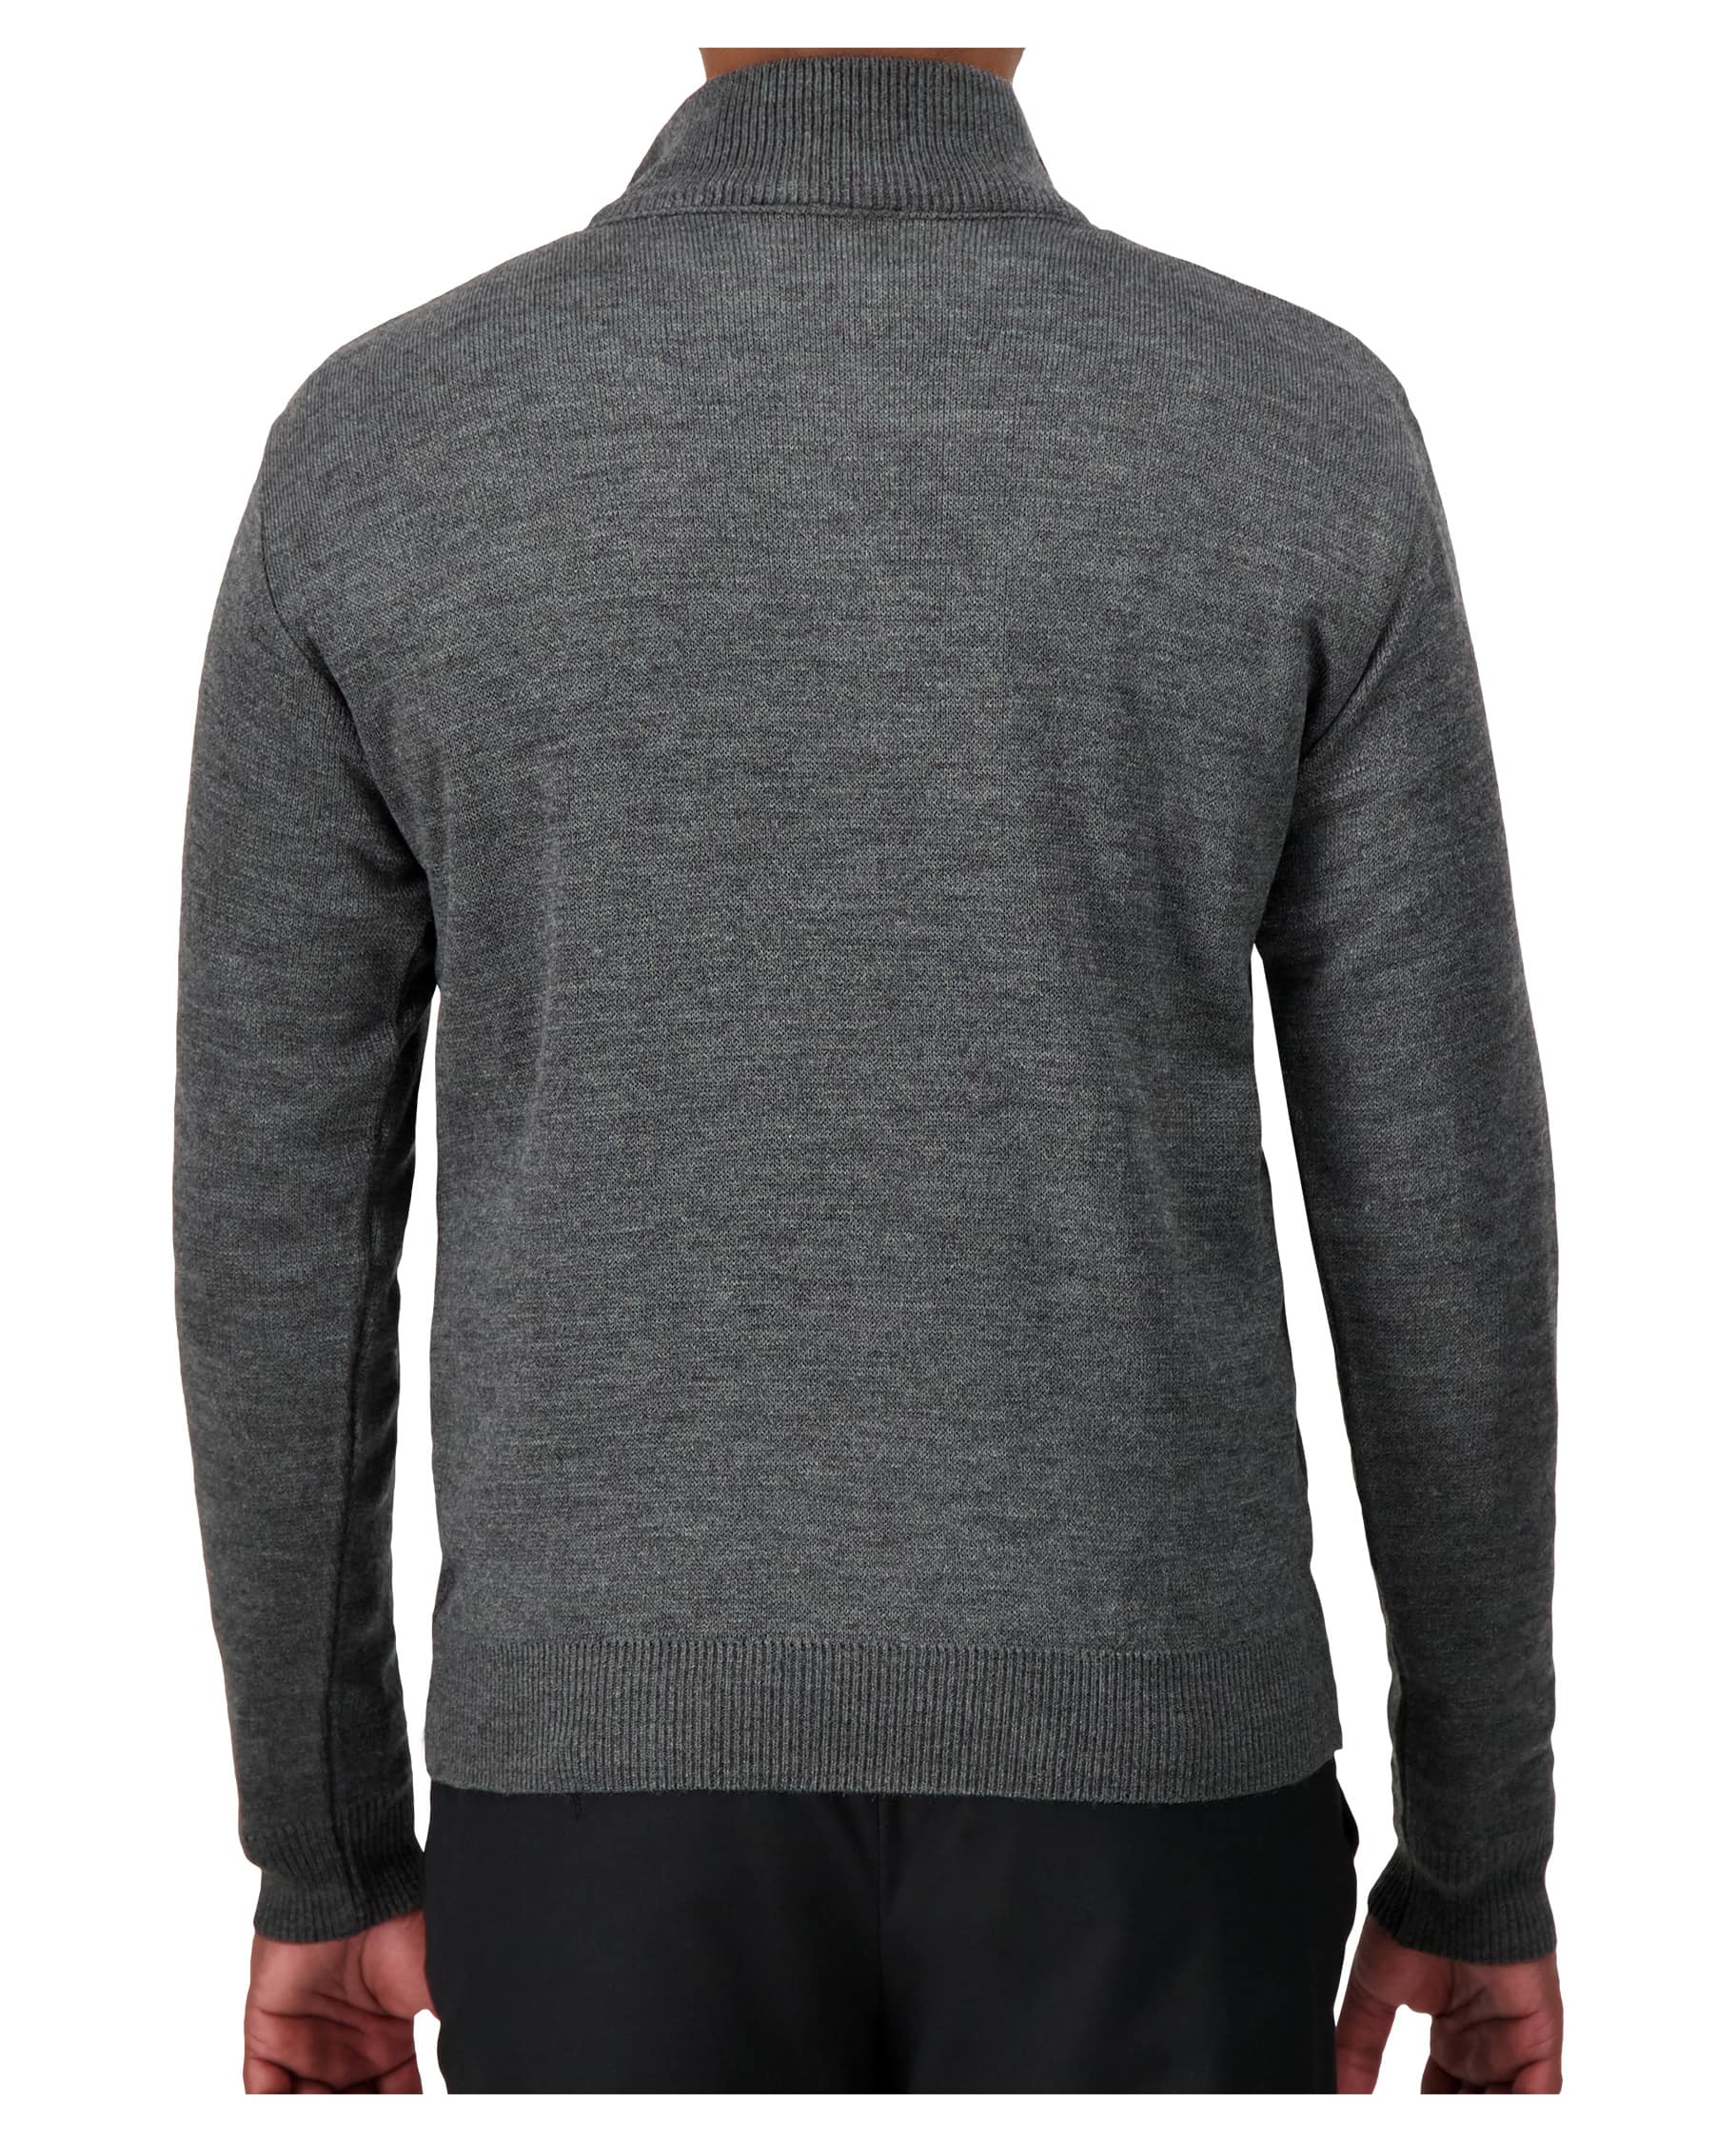 back of grey quarter zip uniform sweater